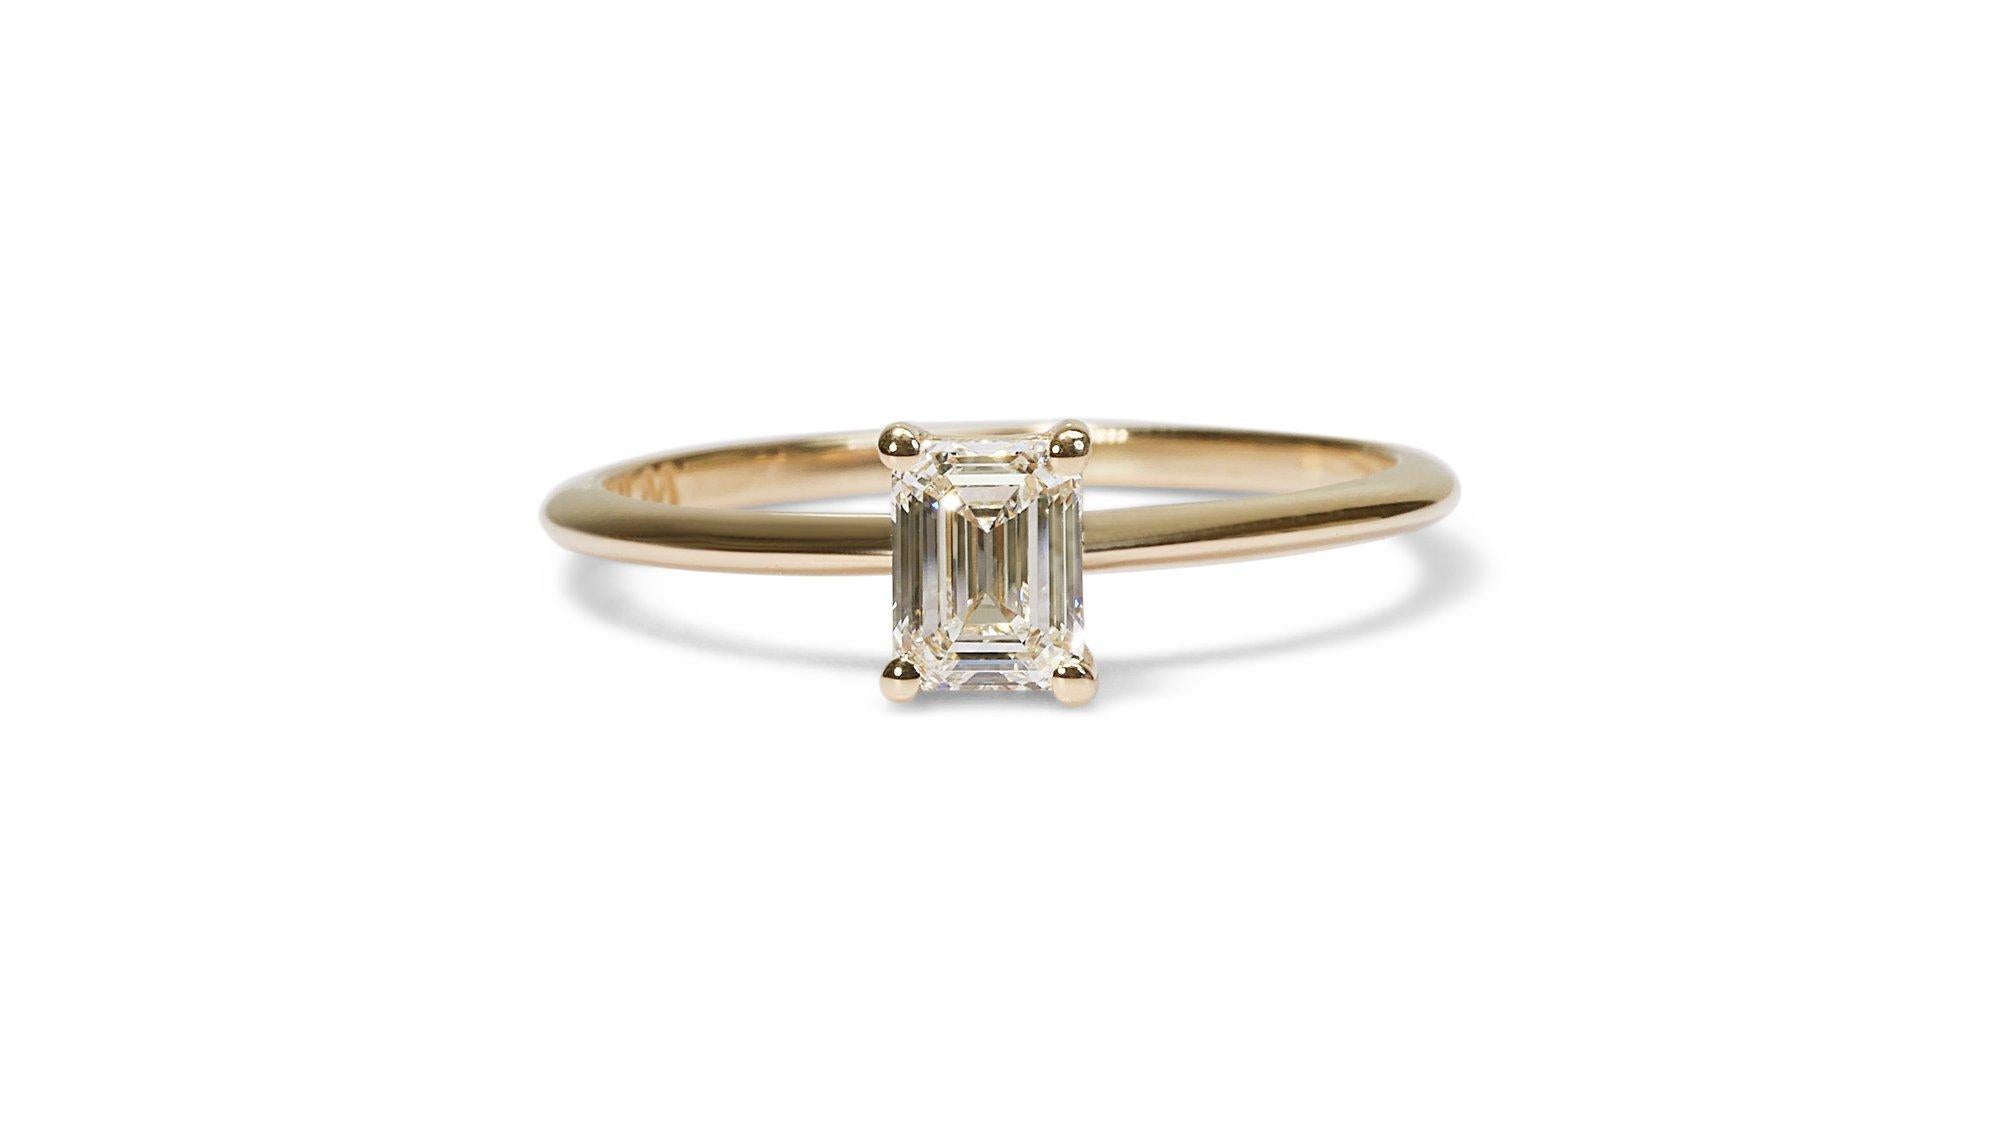 Emerald Cut Beautiful Ring with a dazzling 0.90 carat Emerald cut natural Diamond For Sale